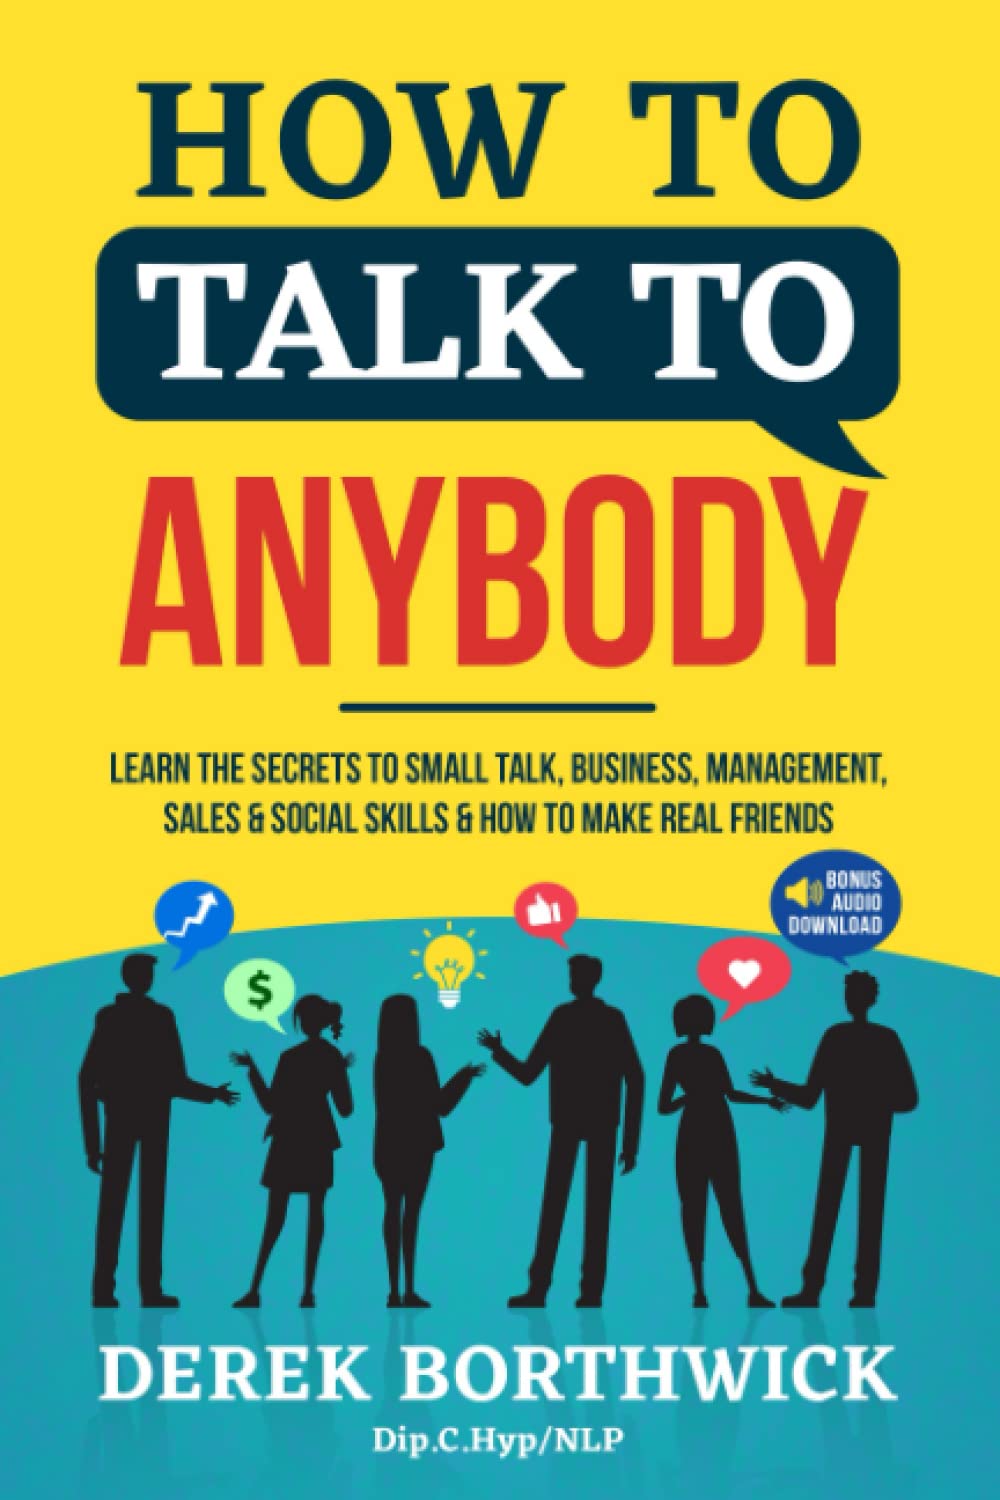 Week #23 – Derek Borthwick – How to Talk to Anybody